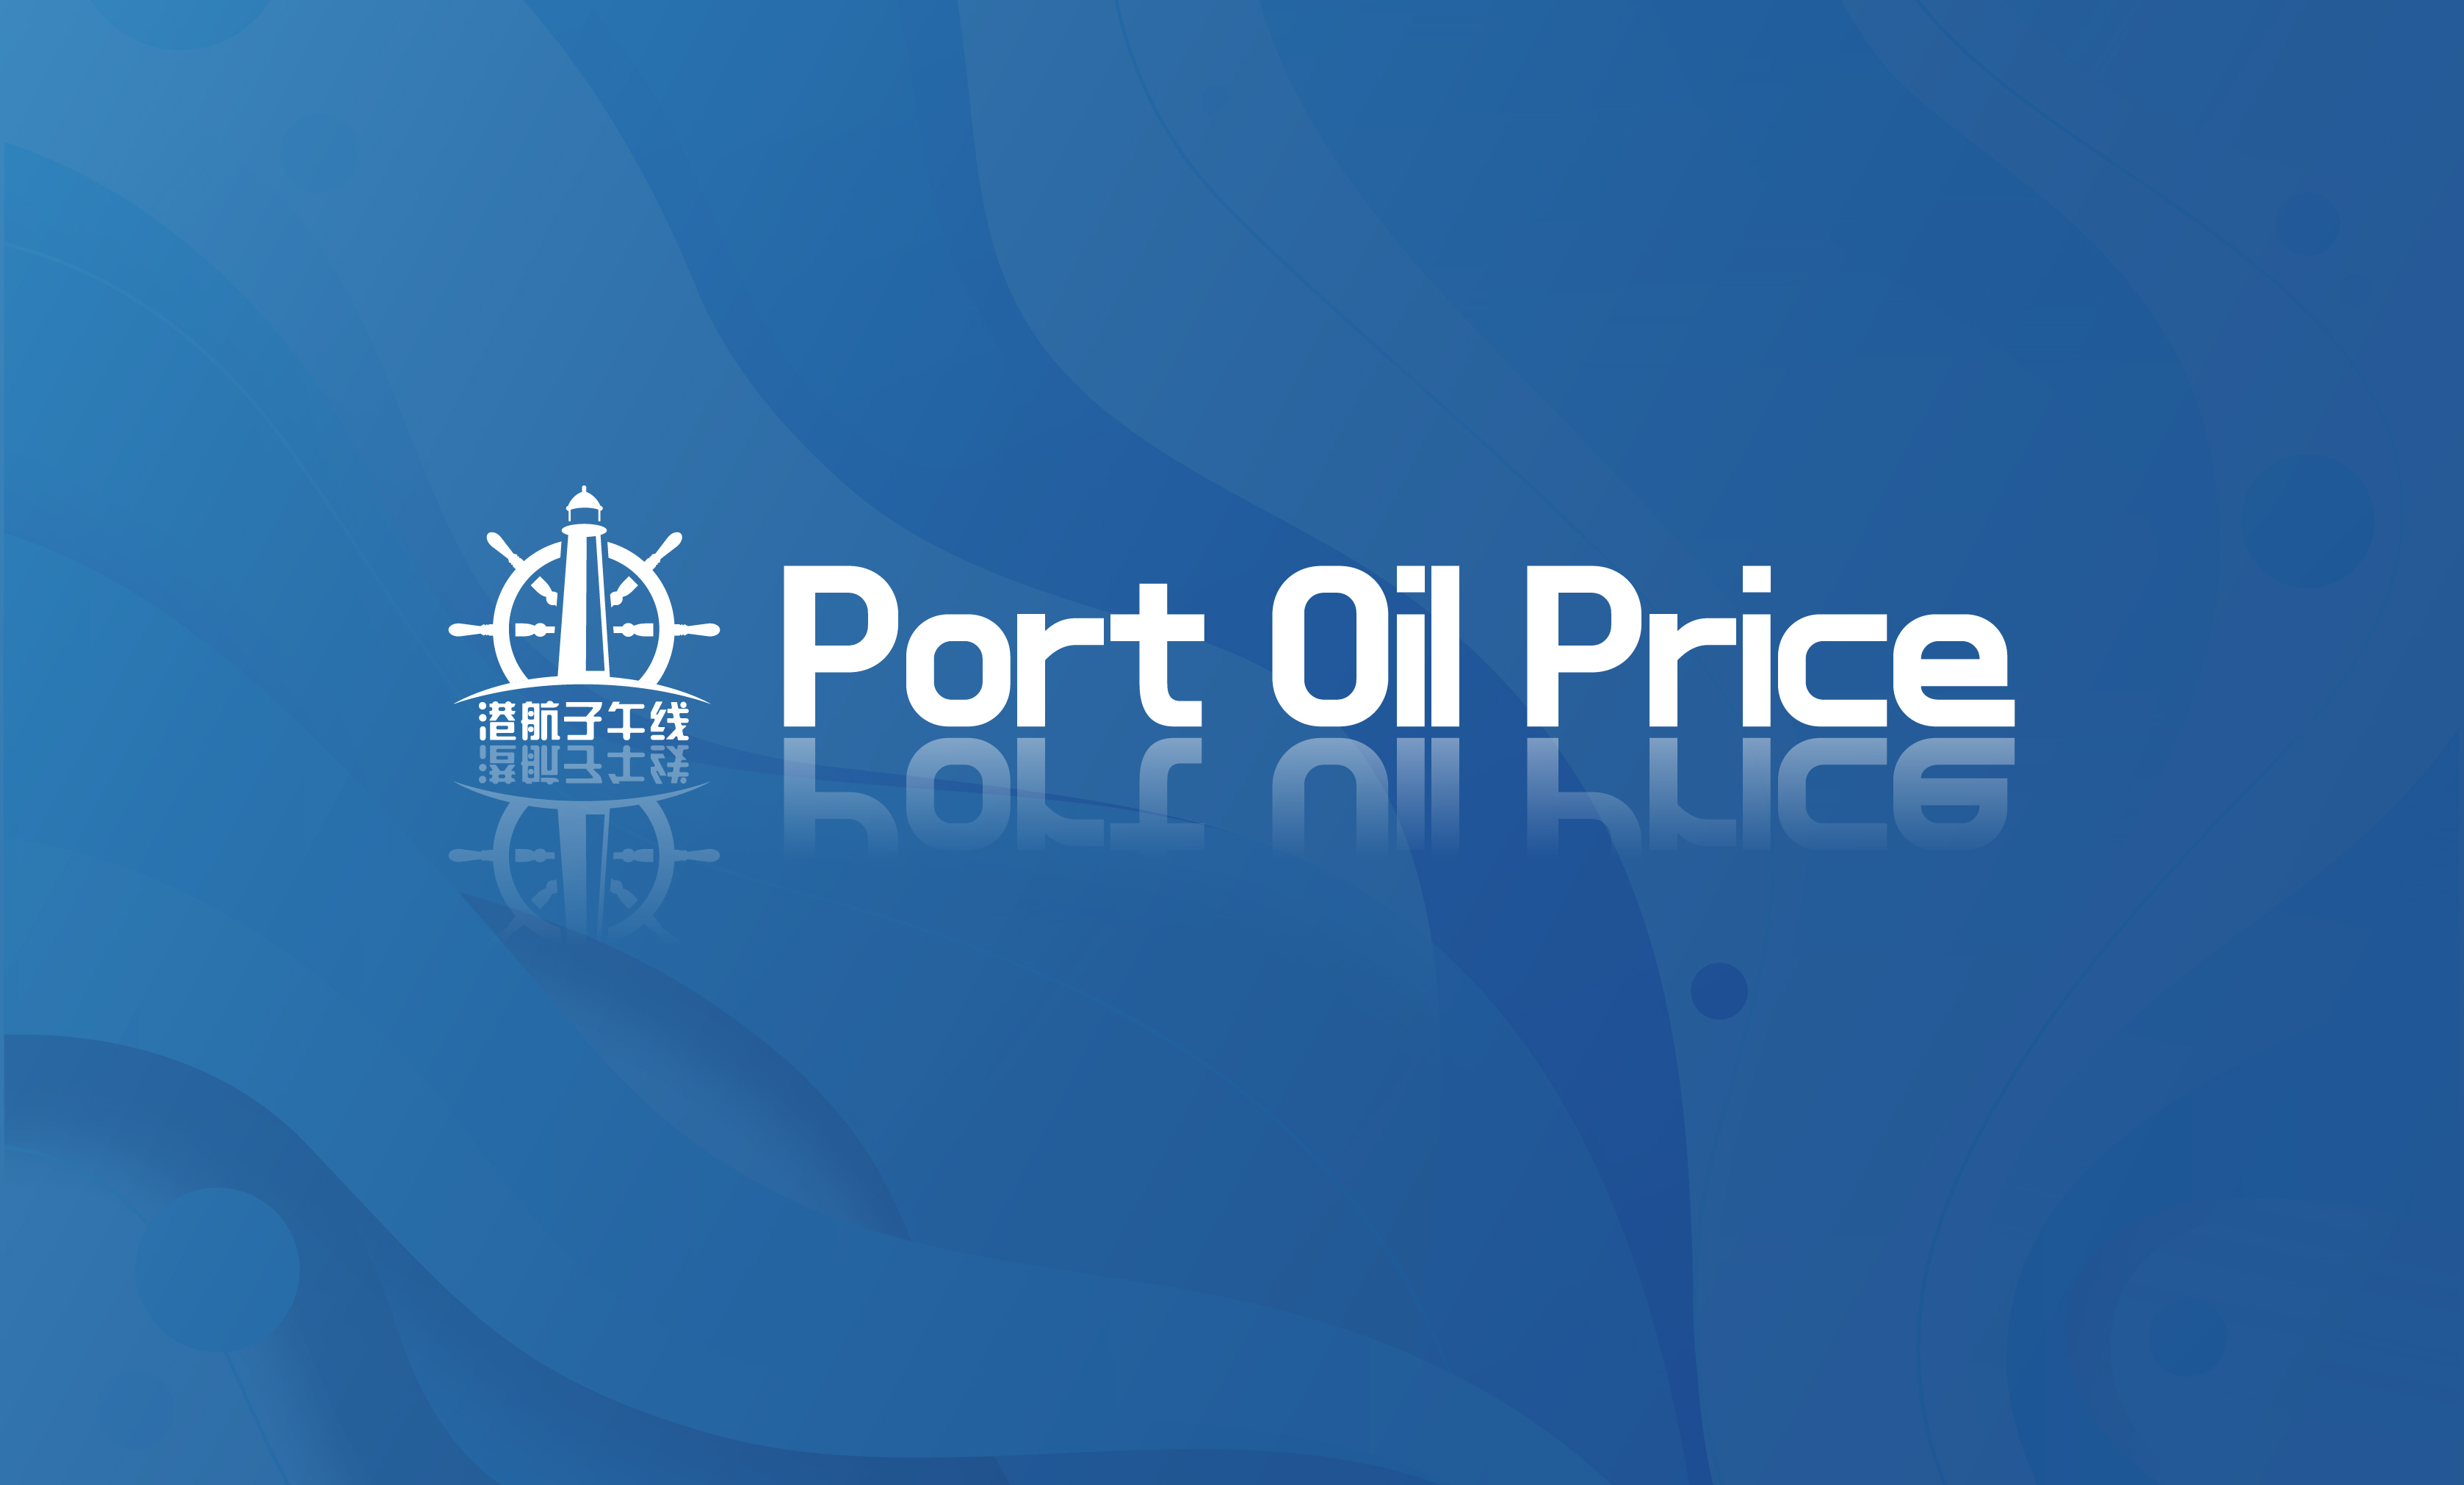 9/27 Oil Price for Global Popular Ports